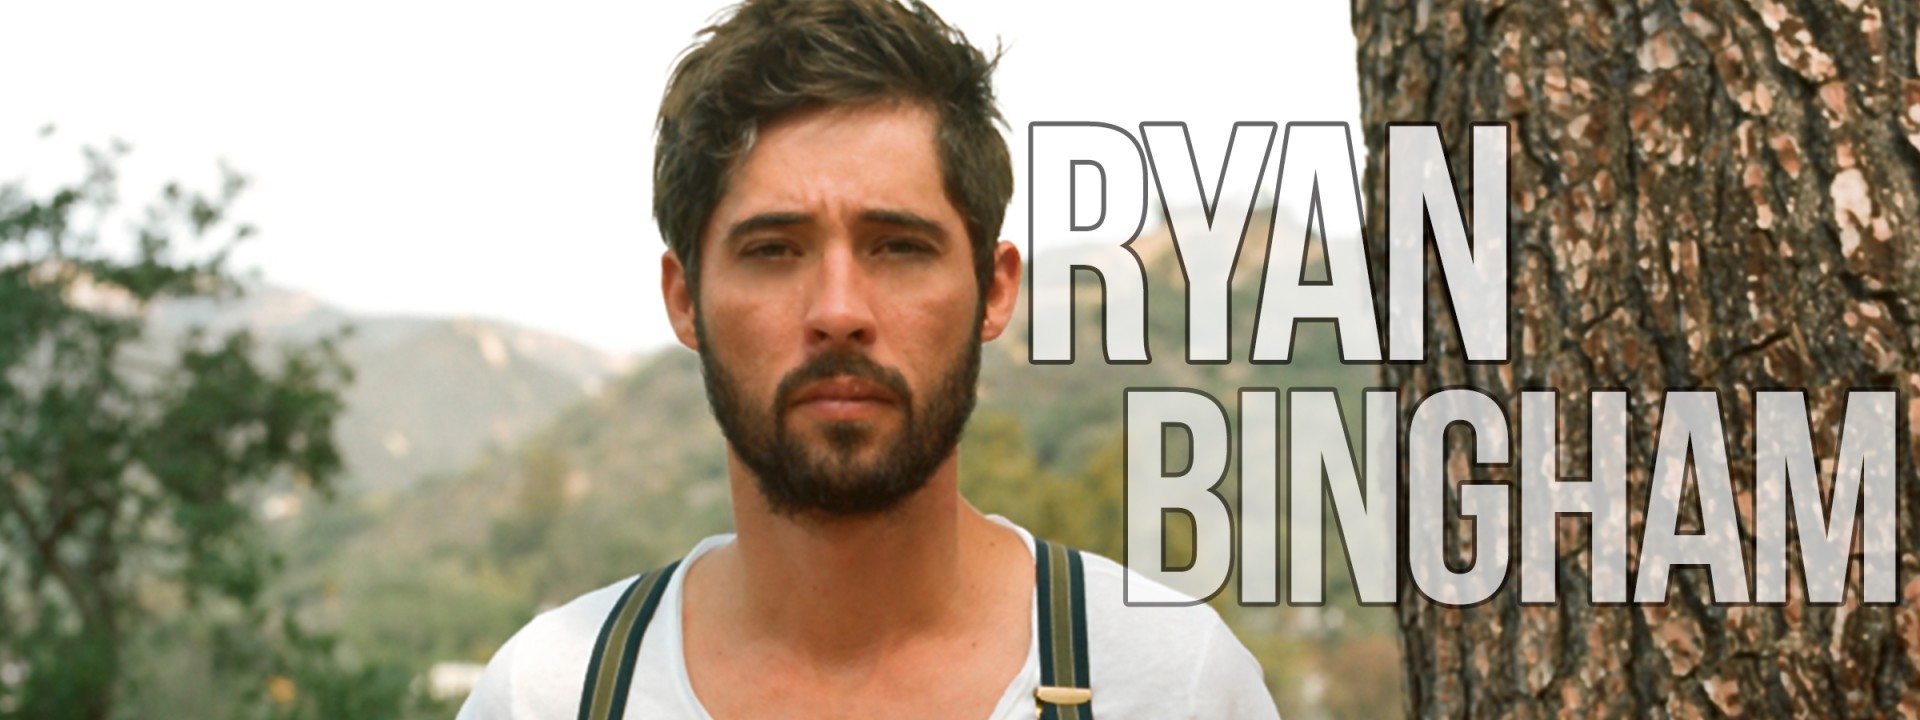 Ryan-Bingham_button